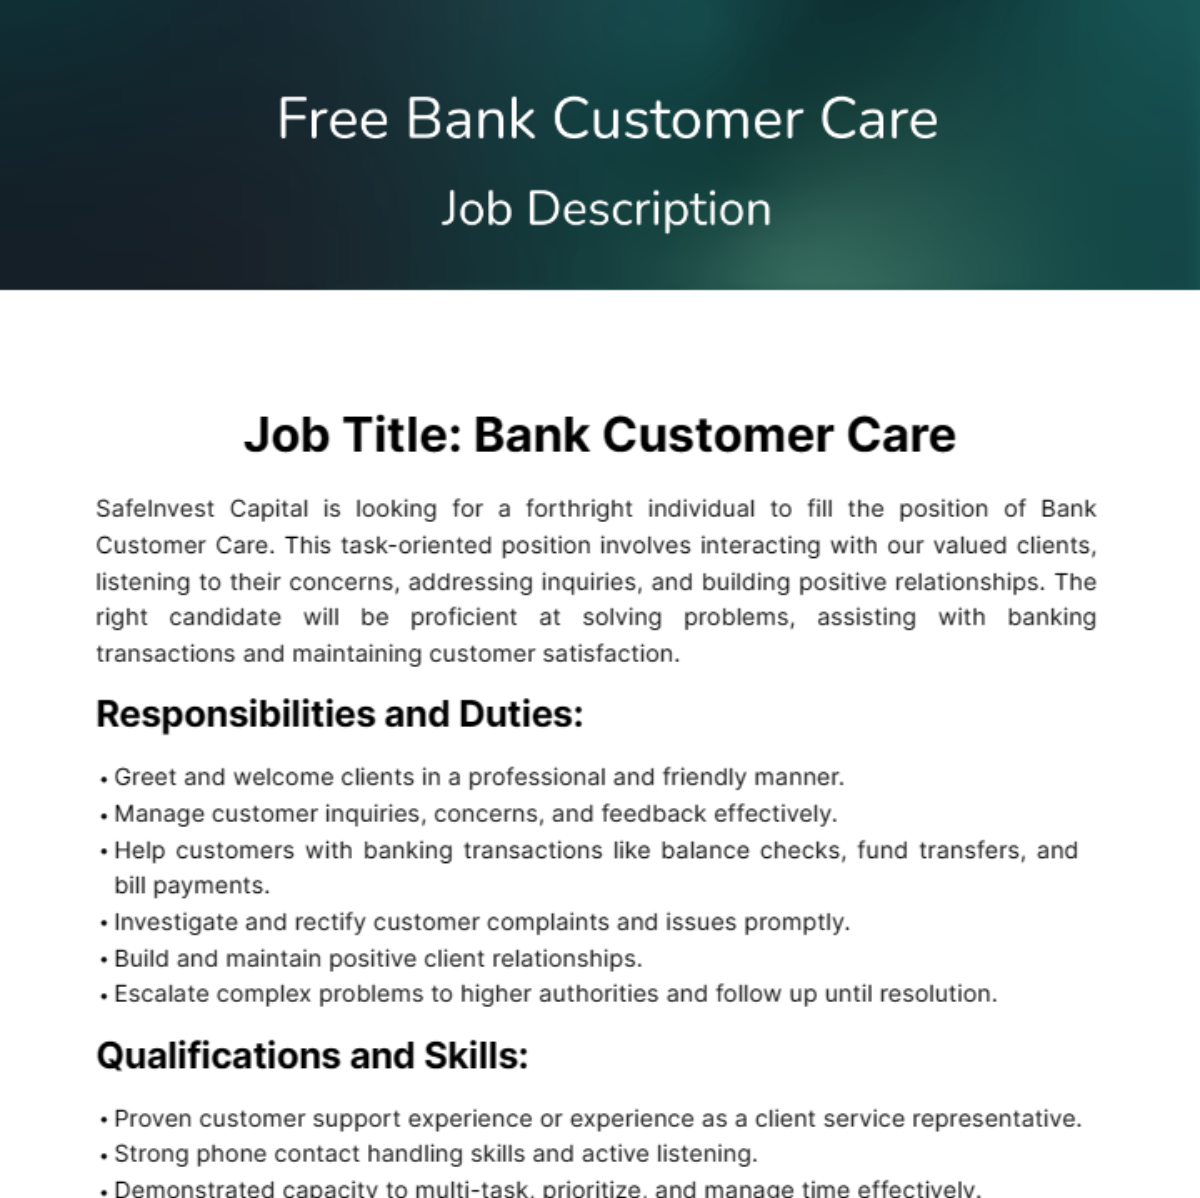 Free Bank Customer Care Job Description Template